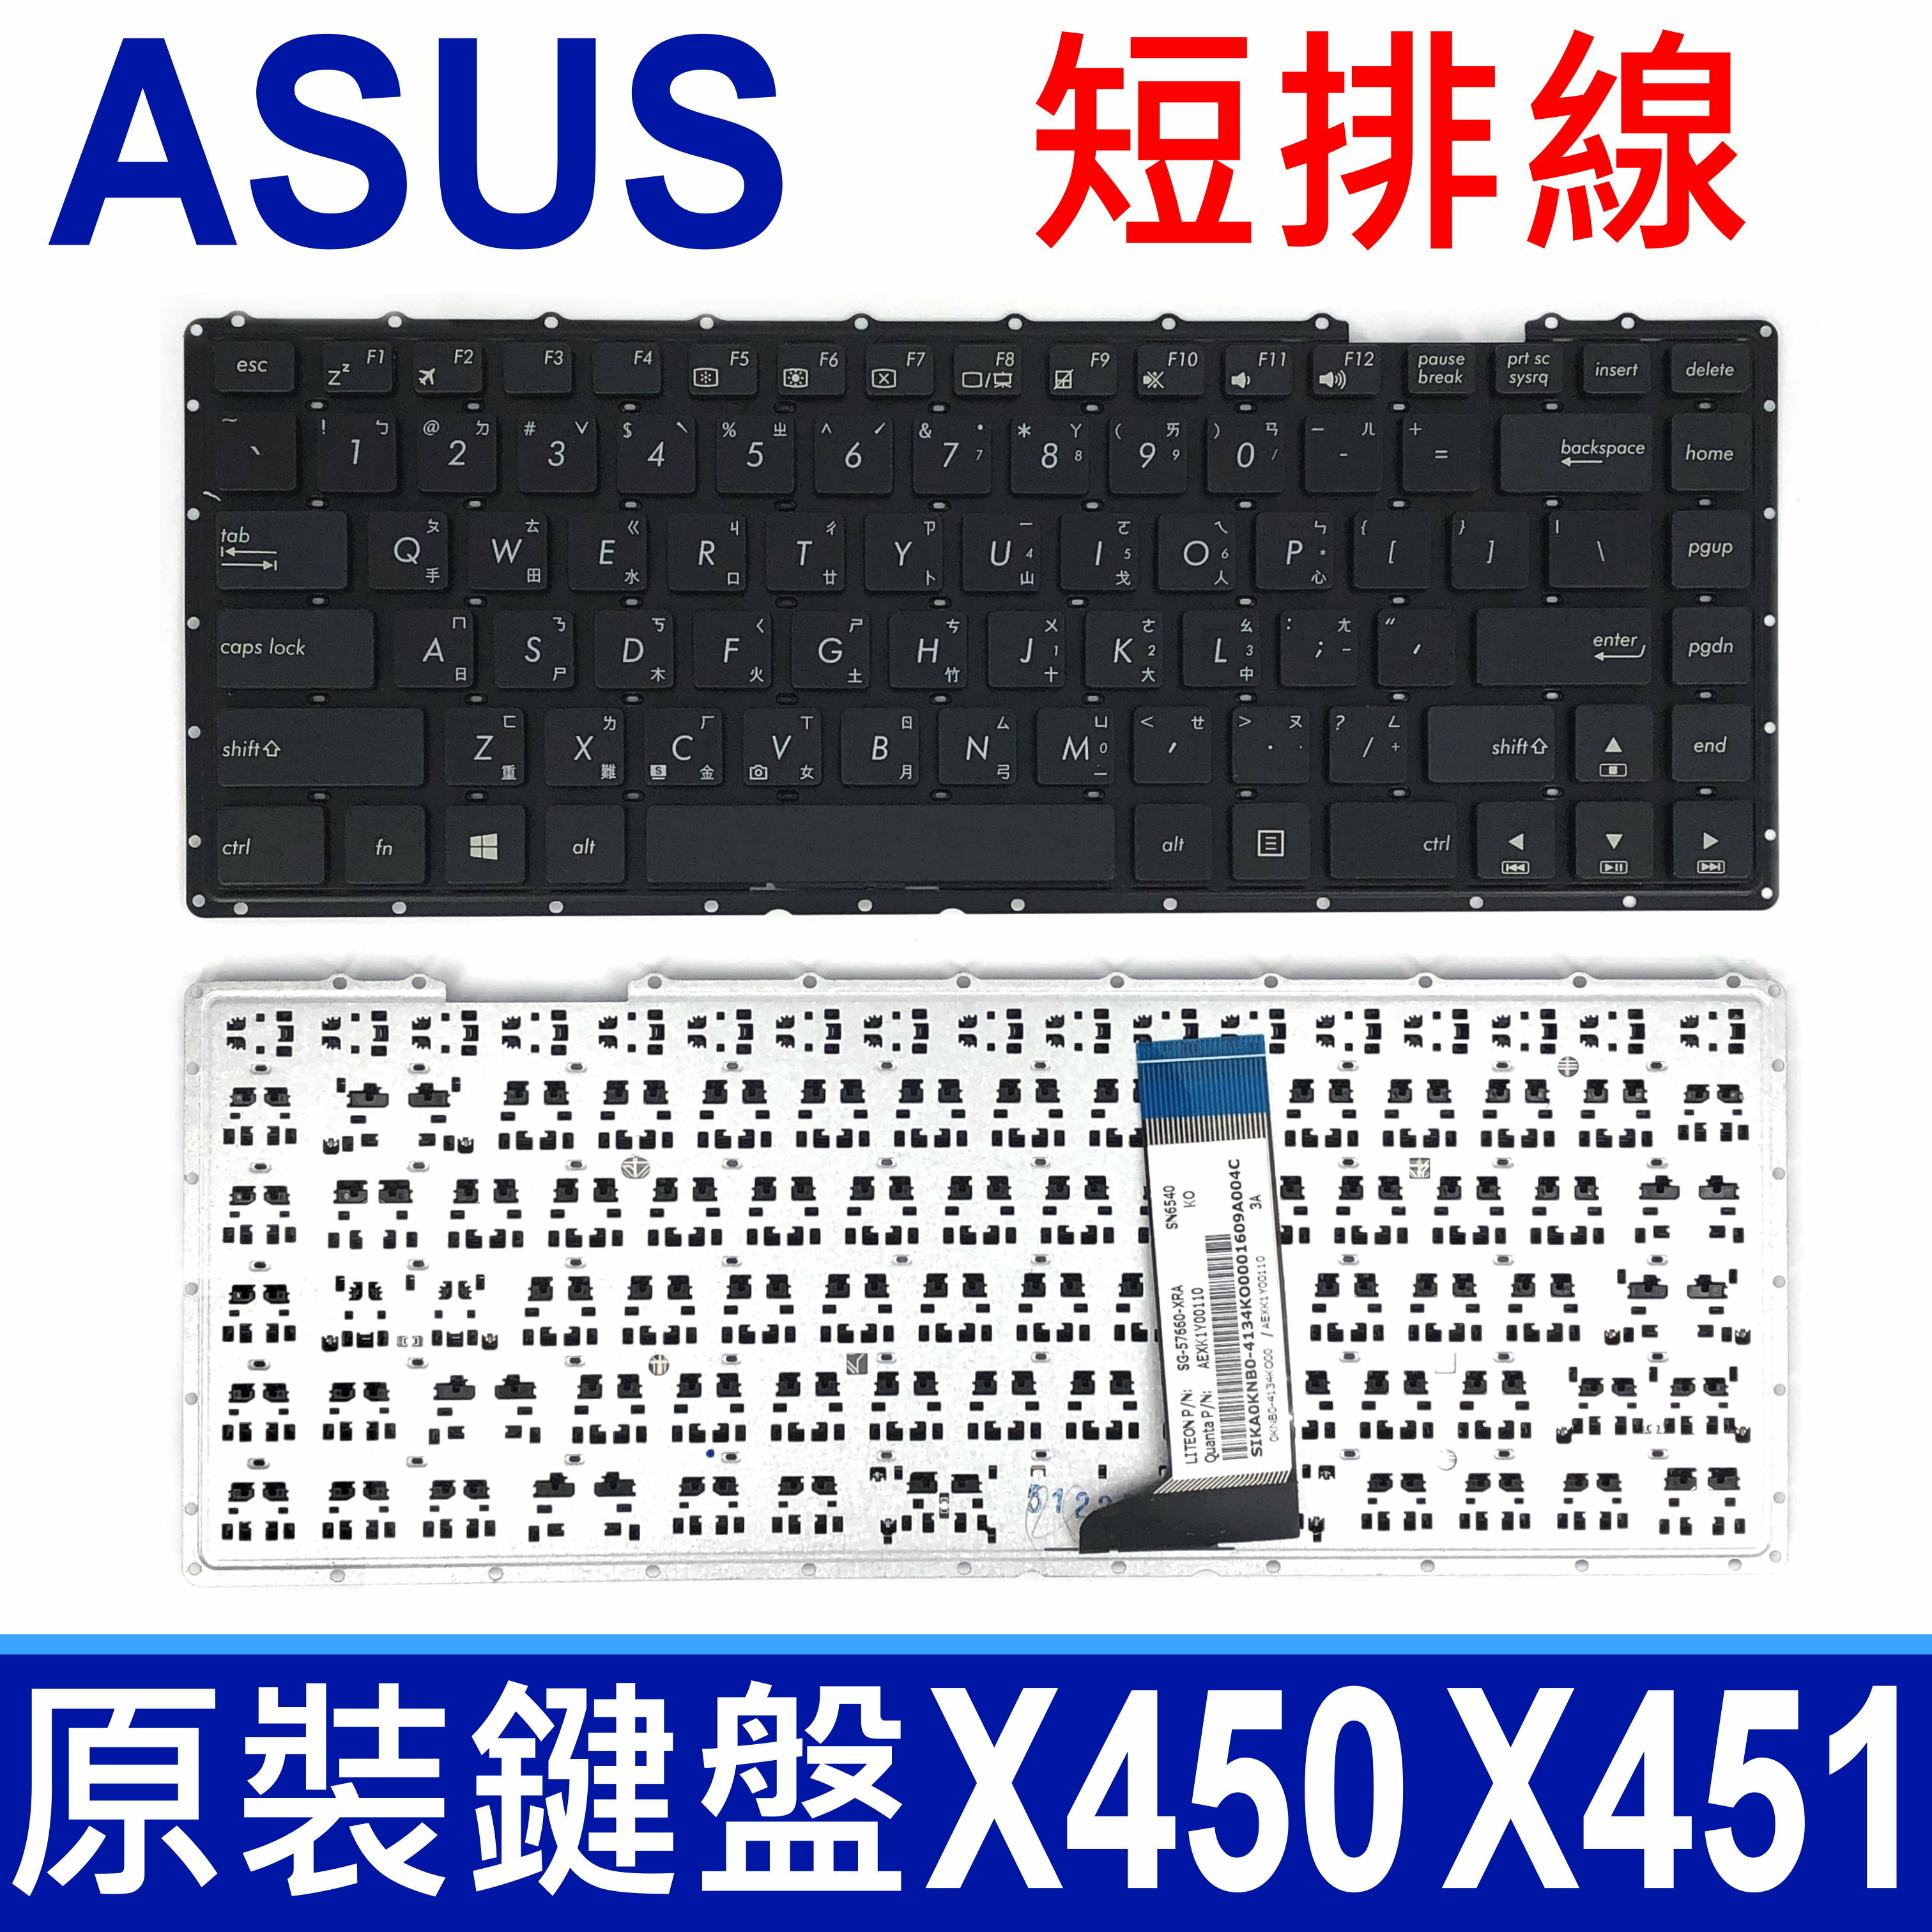 ASUS 華碩 X450 X451 短排 筆電 中文鍵盤 X451MV X452 X453 X453S X453SA X453M X453MA X454 X455 X455L X455LD X455LF X456 X456U X456UJ Y453C Y483L 0KNB0-4135AR00